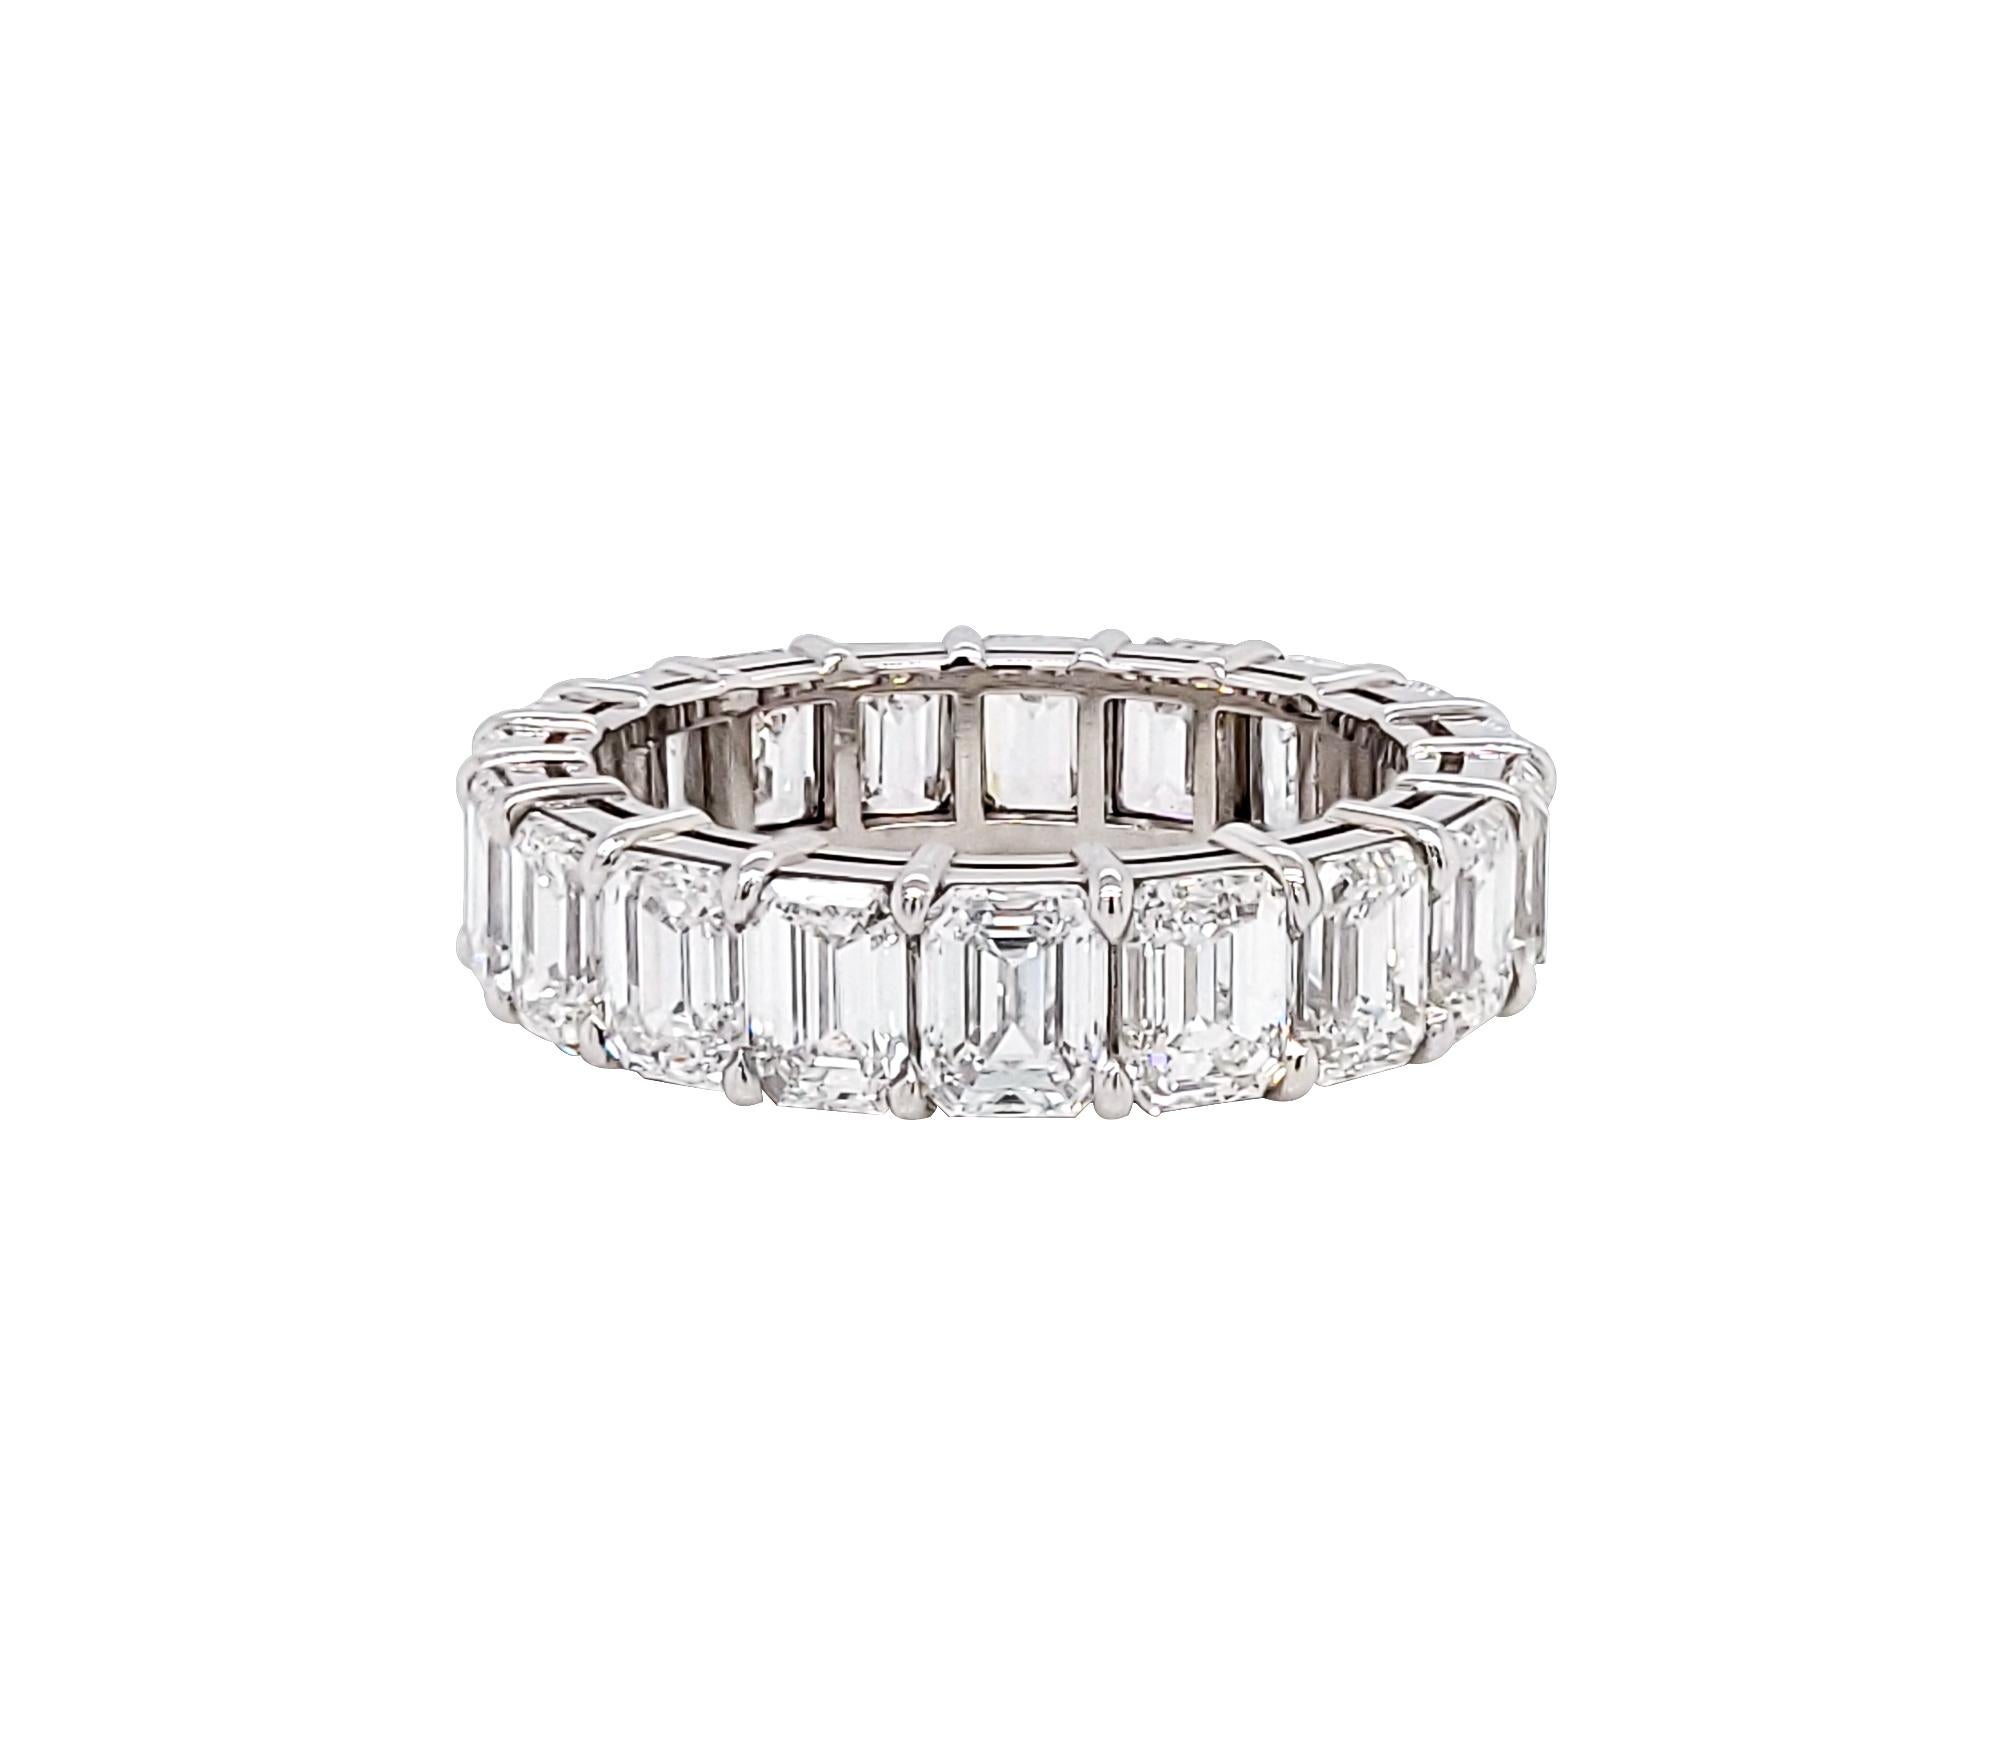 Women's Spectra Fine Jewelry, 5.63 Carat Emerald Cut Diamond Wedding Ring